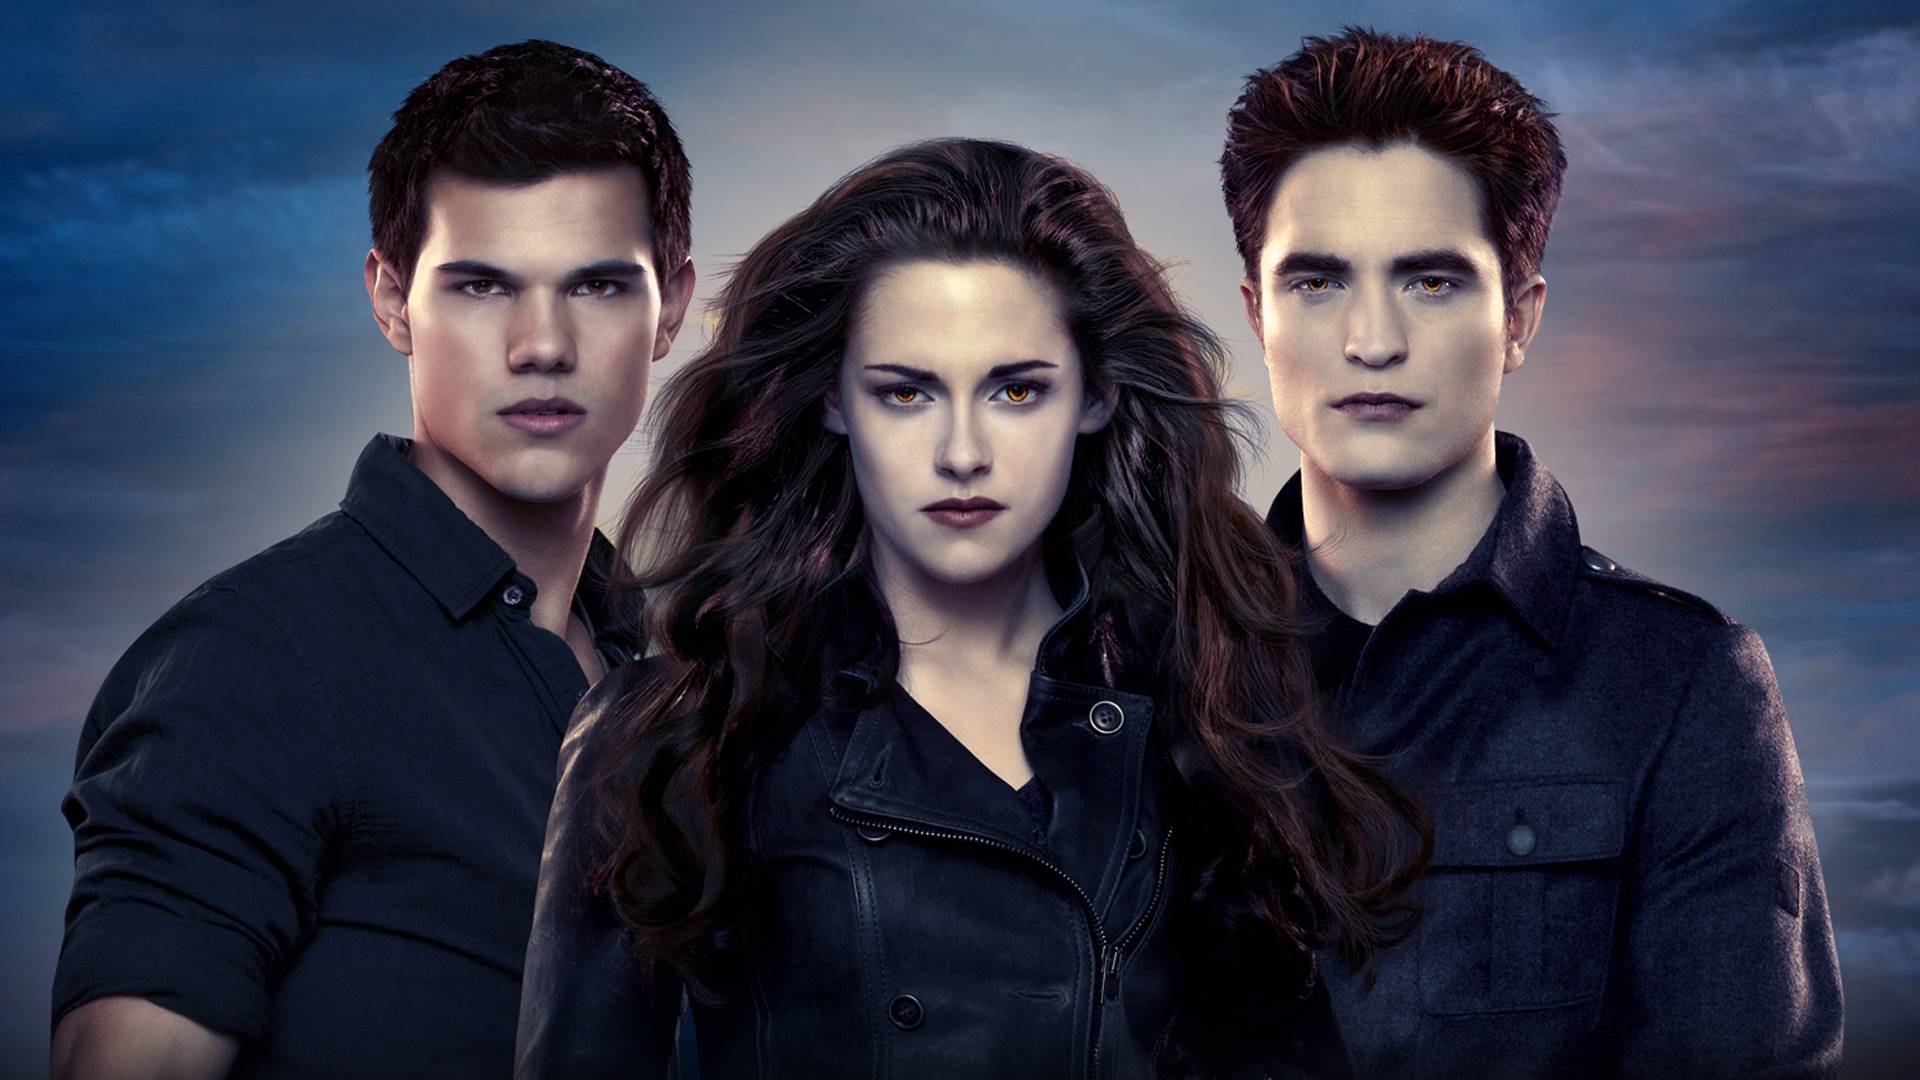 Edward, Bella, Jacob